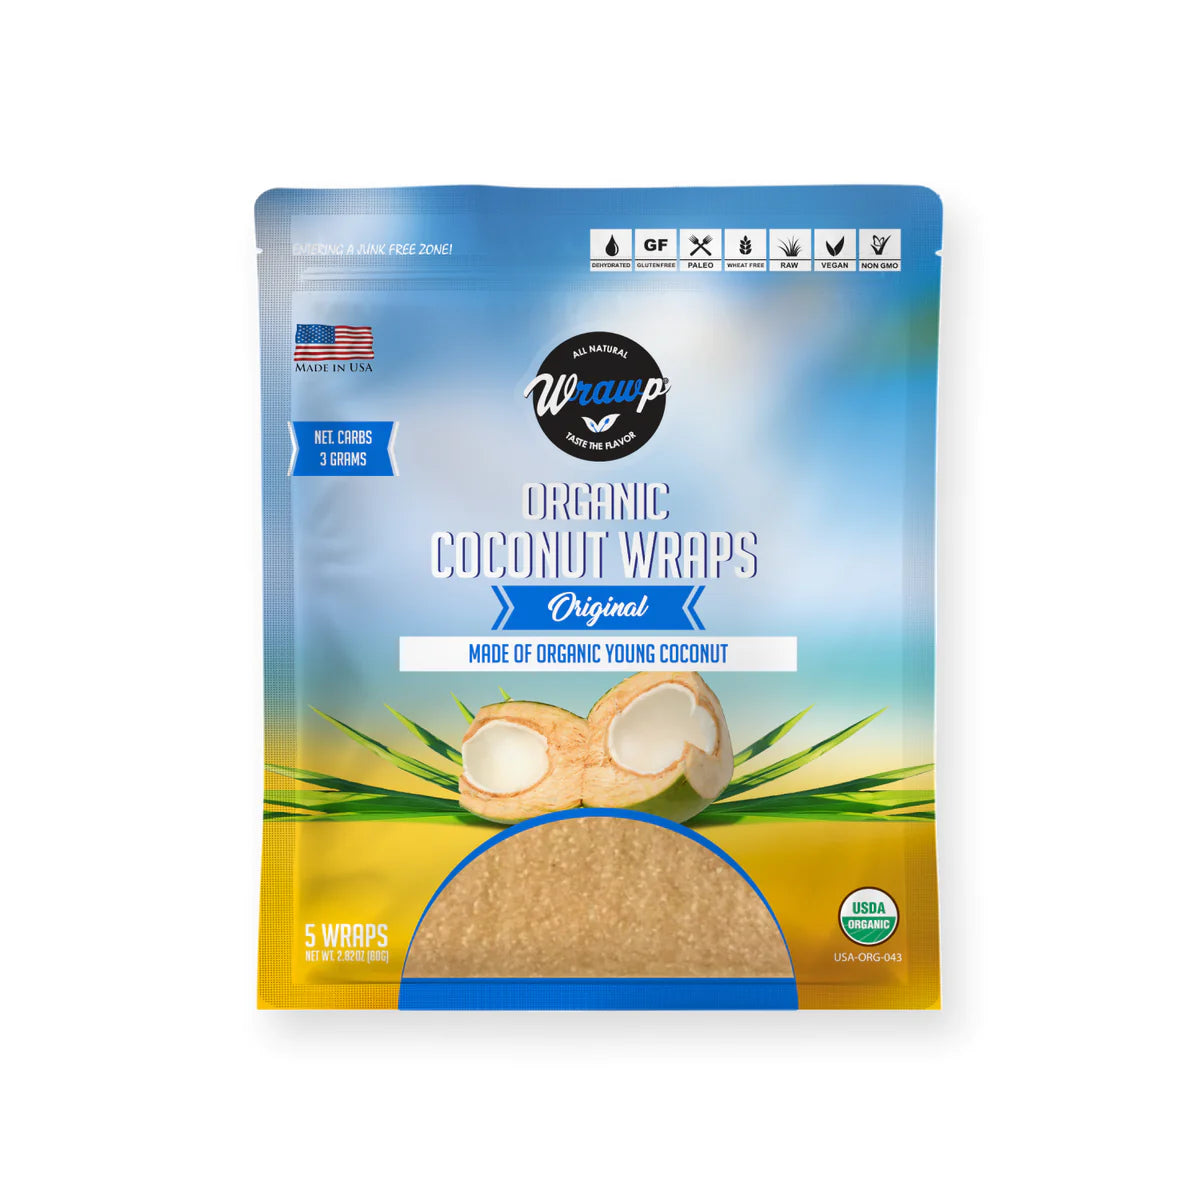 WrawP Coconut Wraps - Original (80g - 5 wraps)